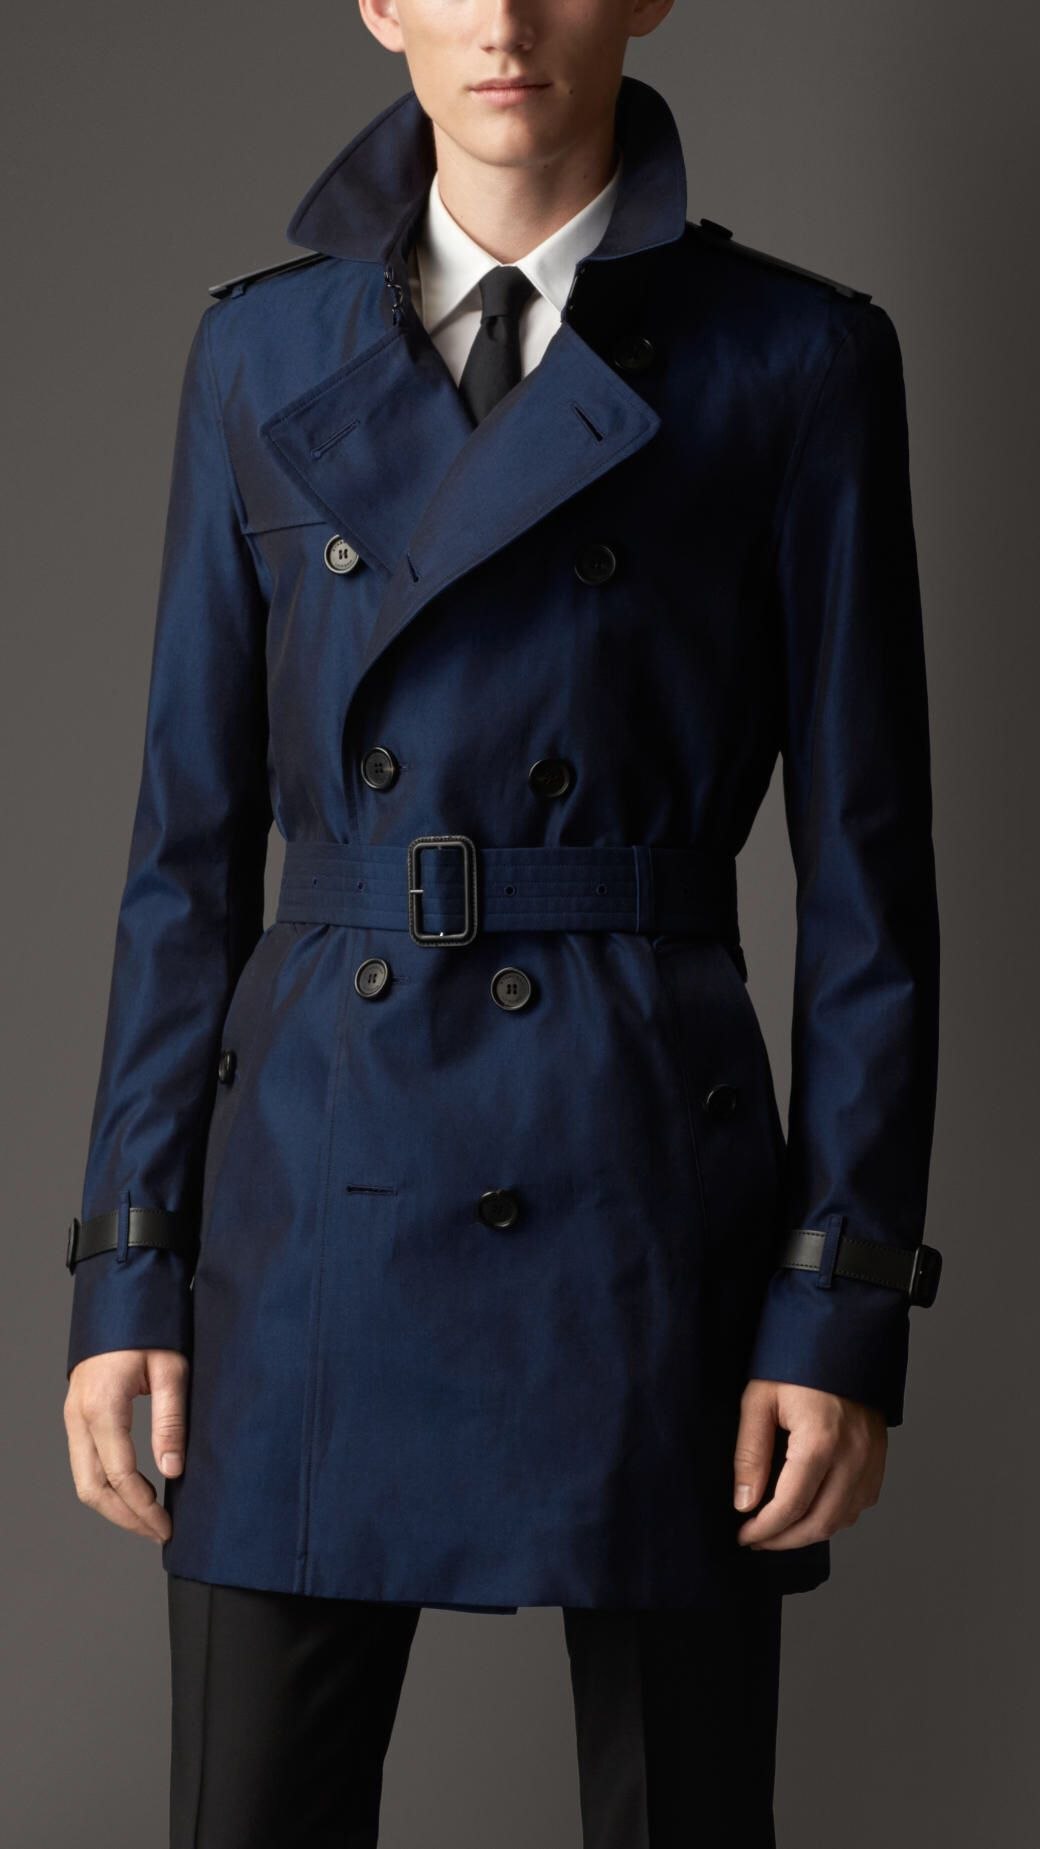 Burberry Trench Coat мужской синий